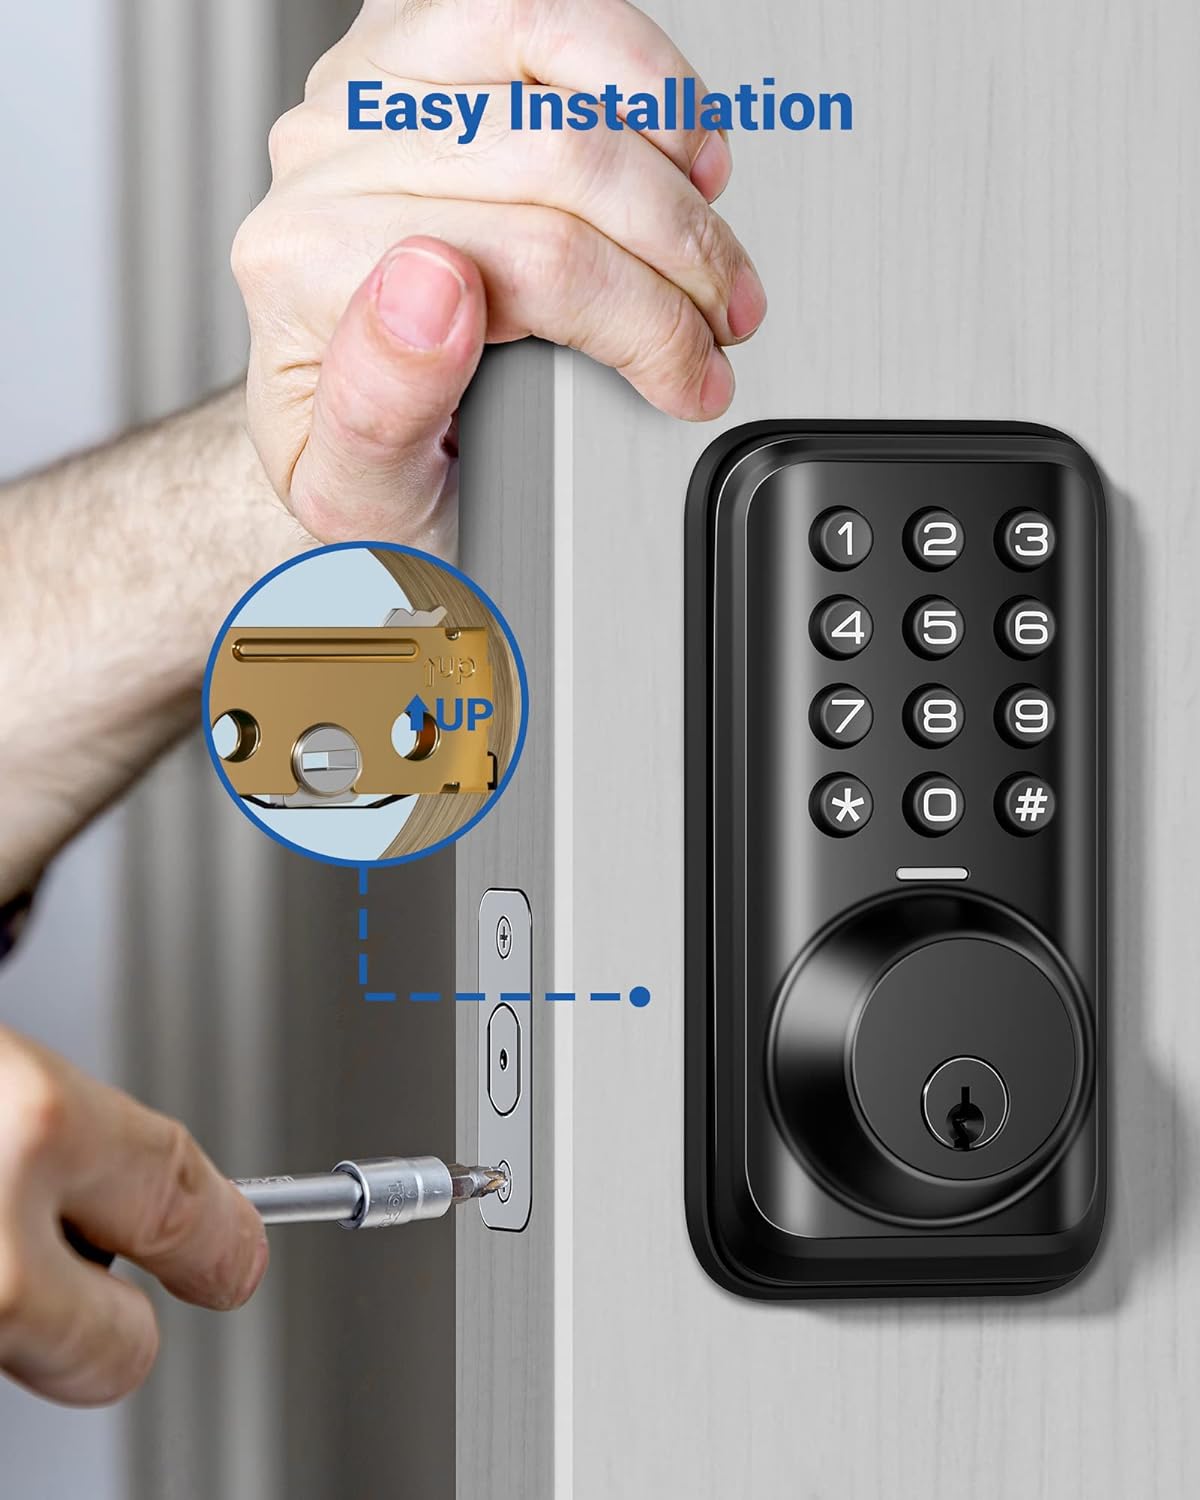 Veise ZS01 Keyless Entry Door Lock, Electronic Keypad Deadbolt Lock, Auto Lock, 1 Touch Locking & 20 User Codes, Anti-Peeking Password, Easy Installation Design